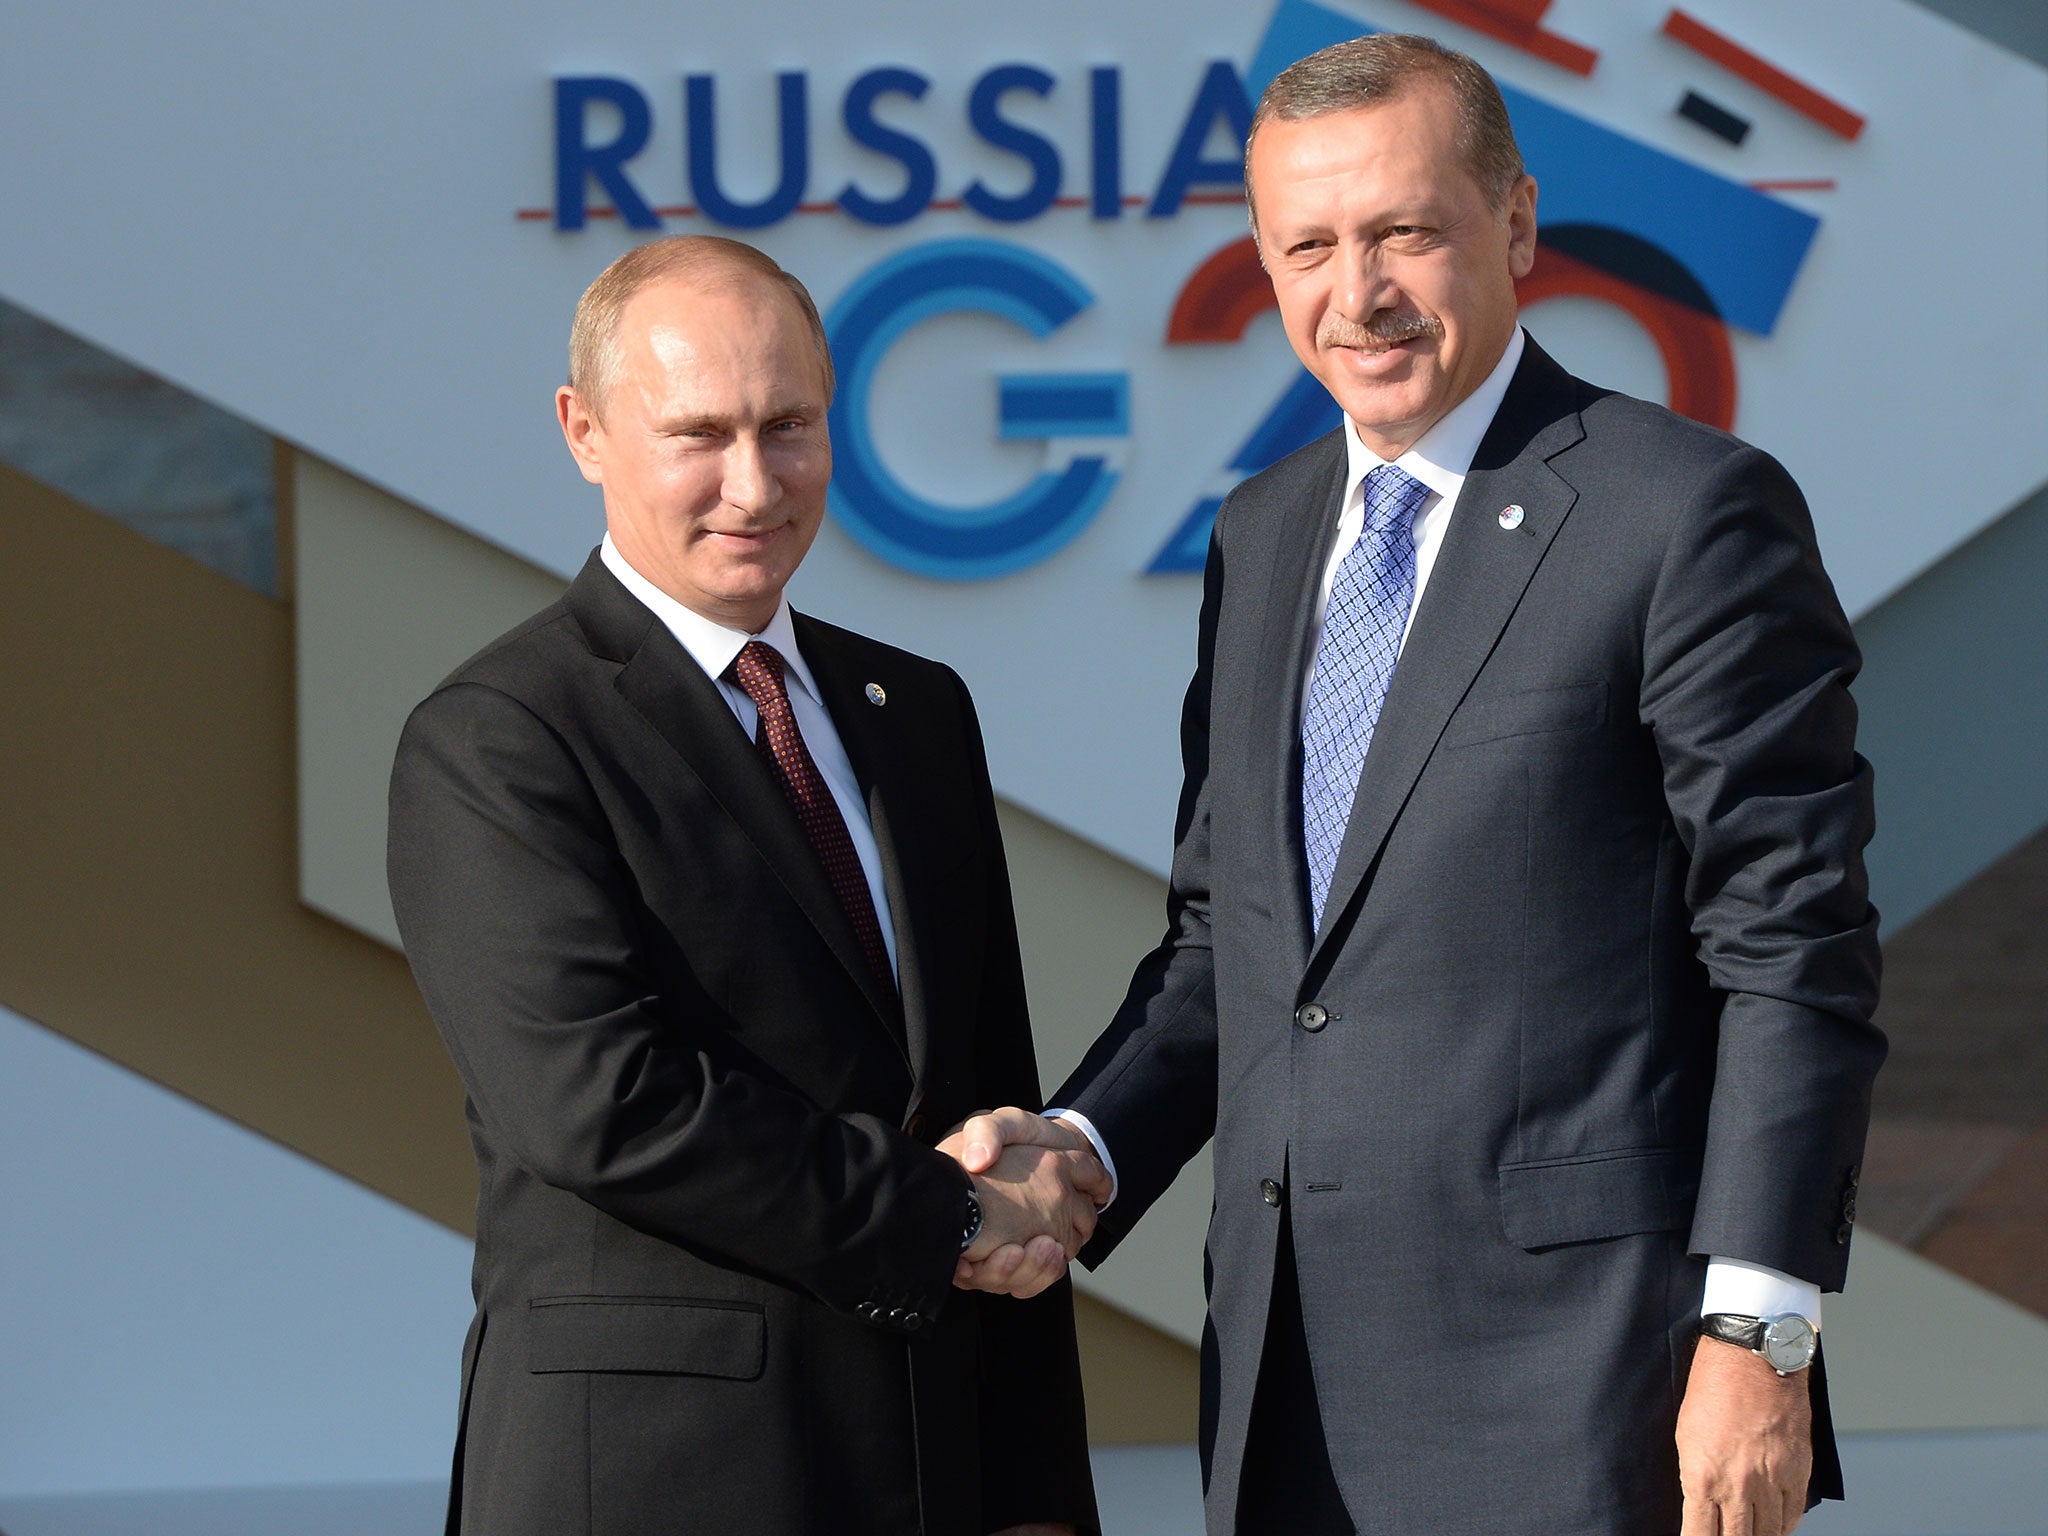 Vladimir Putin and Recep Tayyip Erdogan have previously been close allies